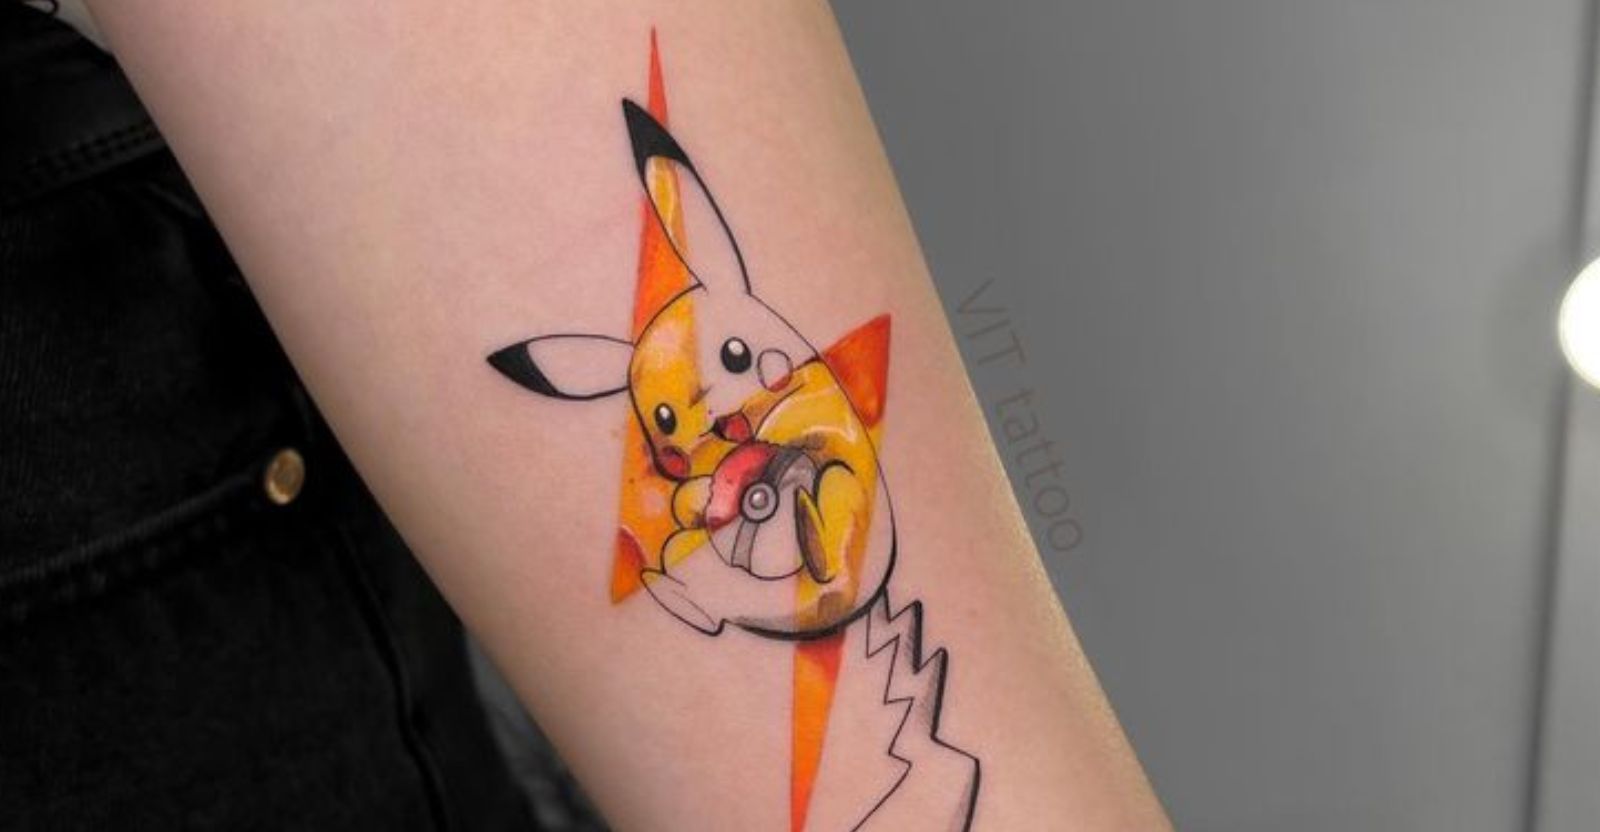 Tattoo uploaded by Xavier • Pikachu tattoo by bakajennah on Instagram. # pikachu #pokeball #kawaii #cute #pokemon #anime #videogame #tvshow #pokemon  #anime #videogame #tvshow • Tattoodo